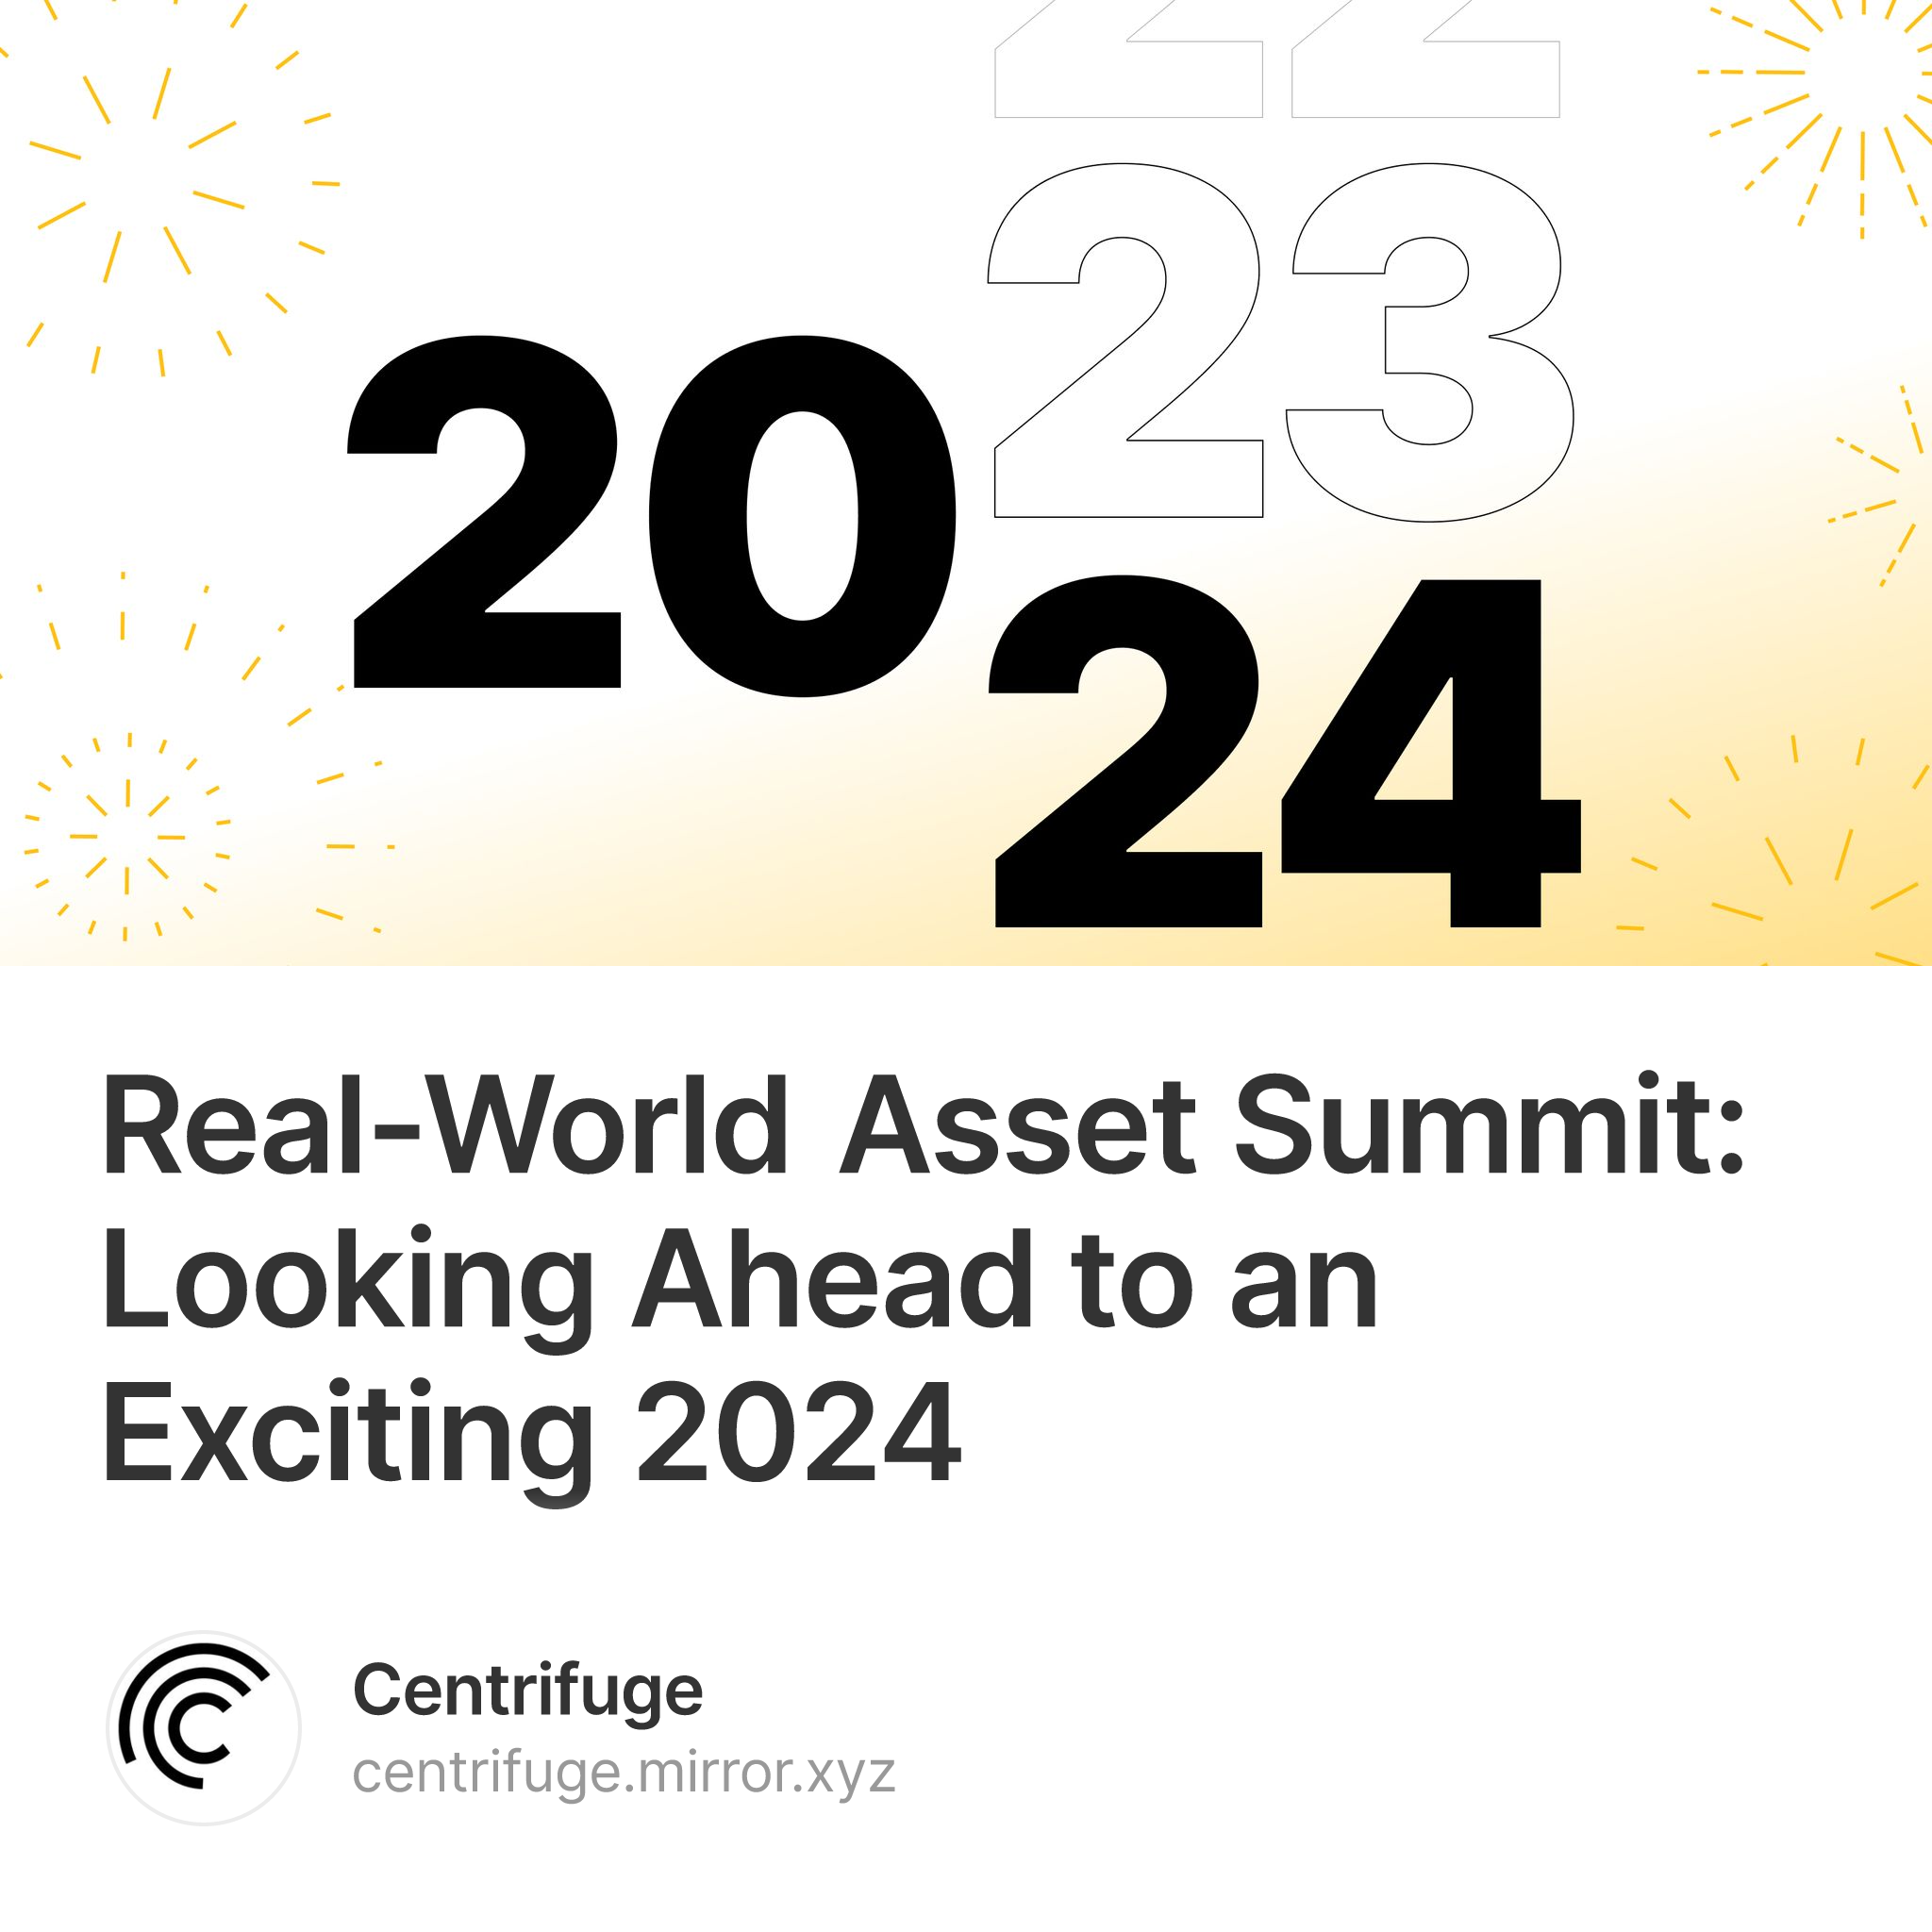 Agenda at a Glance - Realscreen Summit 2024